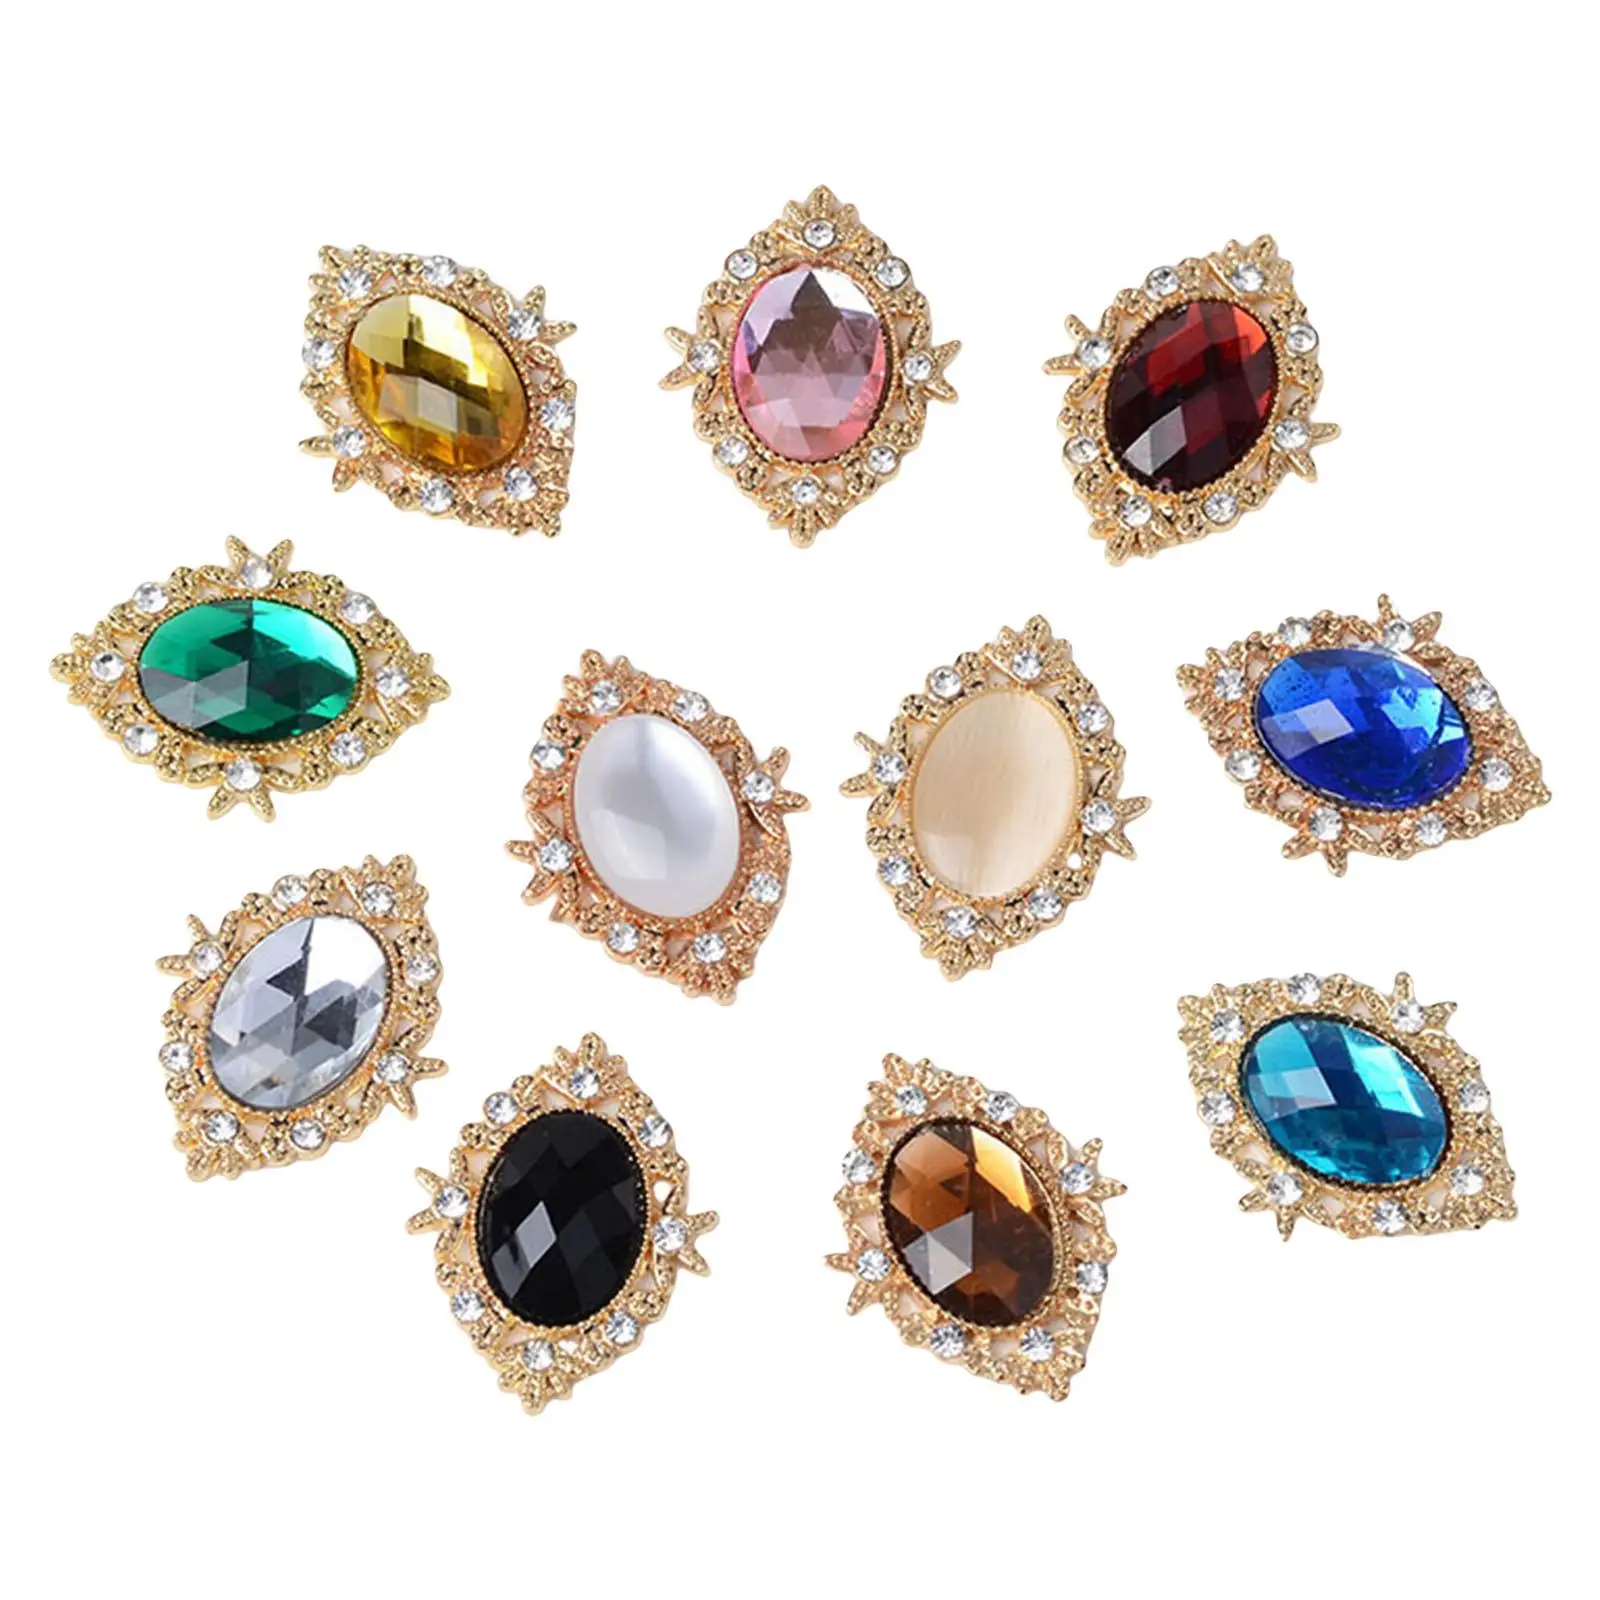 11x Rhinestones Decor Flatback Pearl Crafts Diamante Crystals Stones Acrylic Buttons for Wedding DIY Clothing Accs